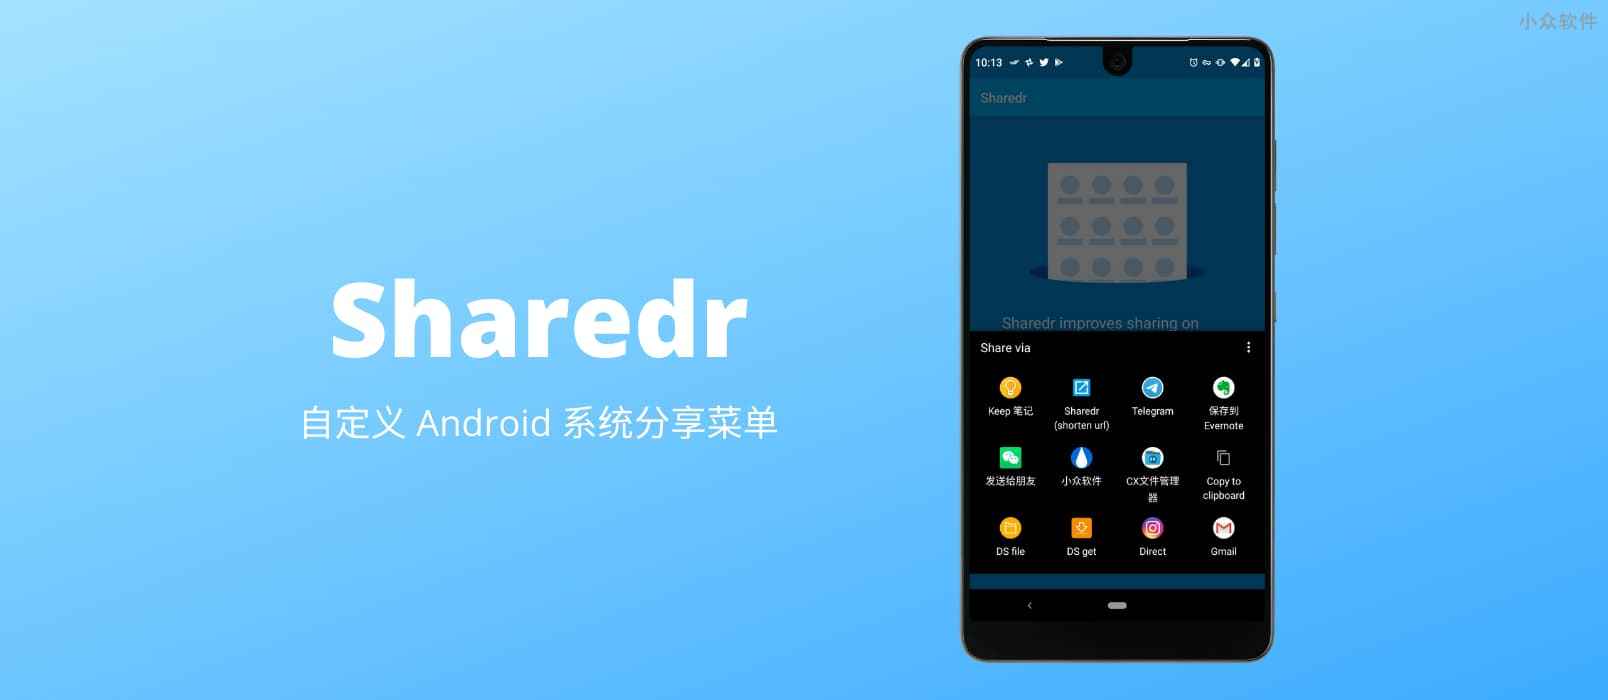 Sharedr - 自定义 Android 系统分享菜单 1